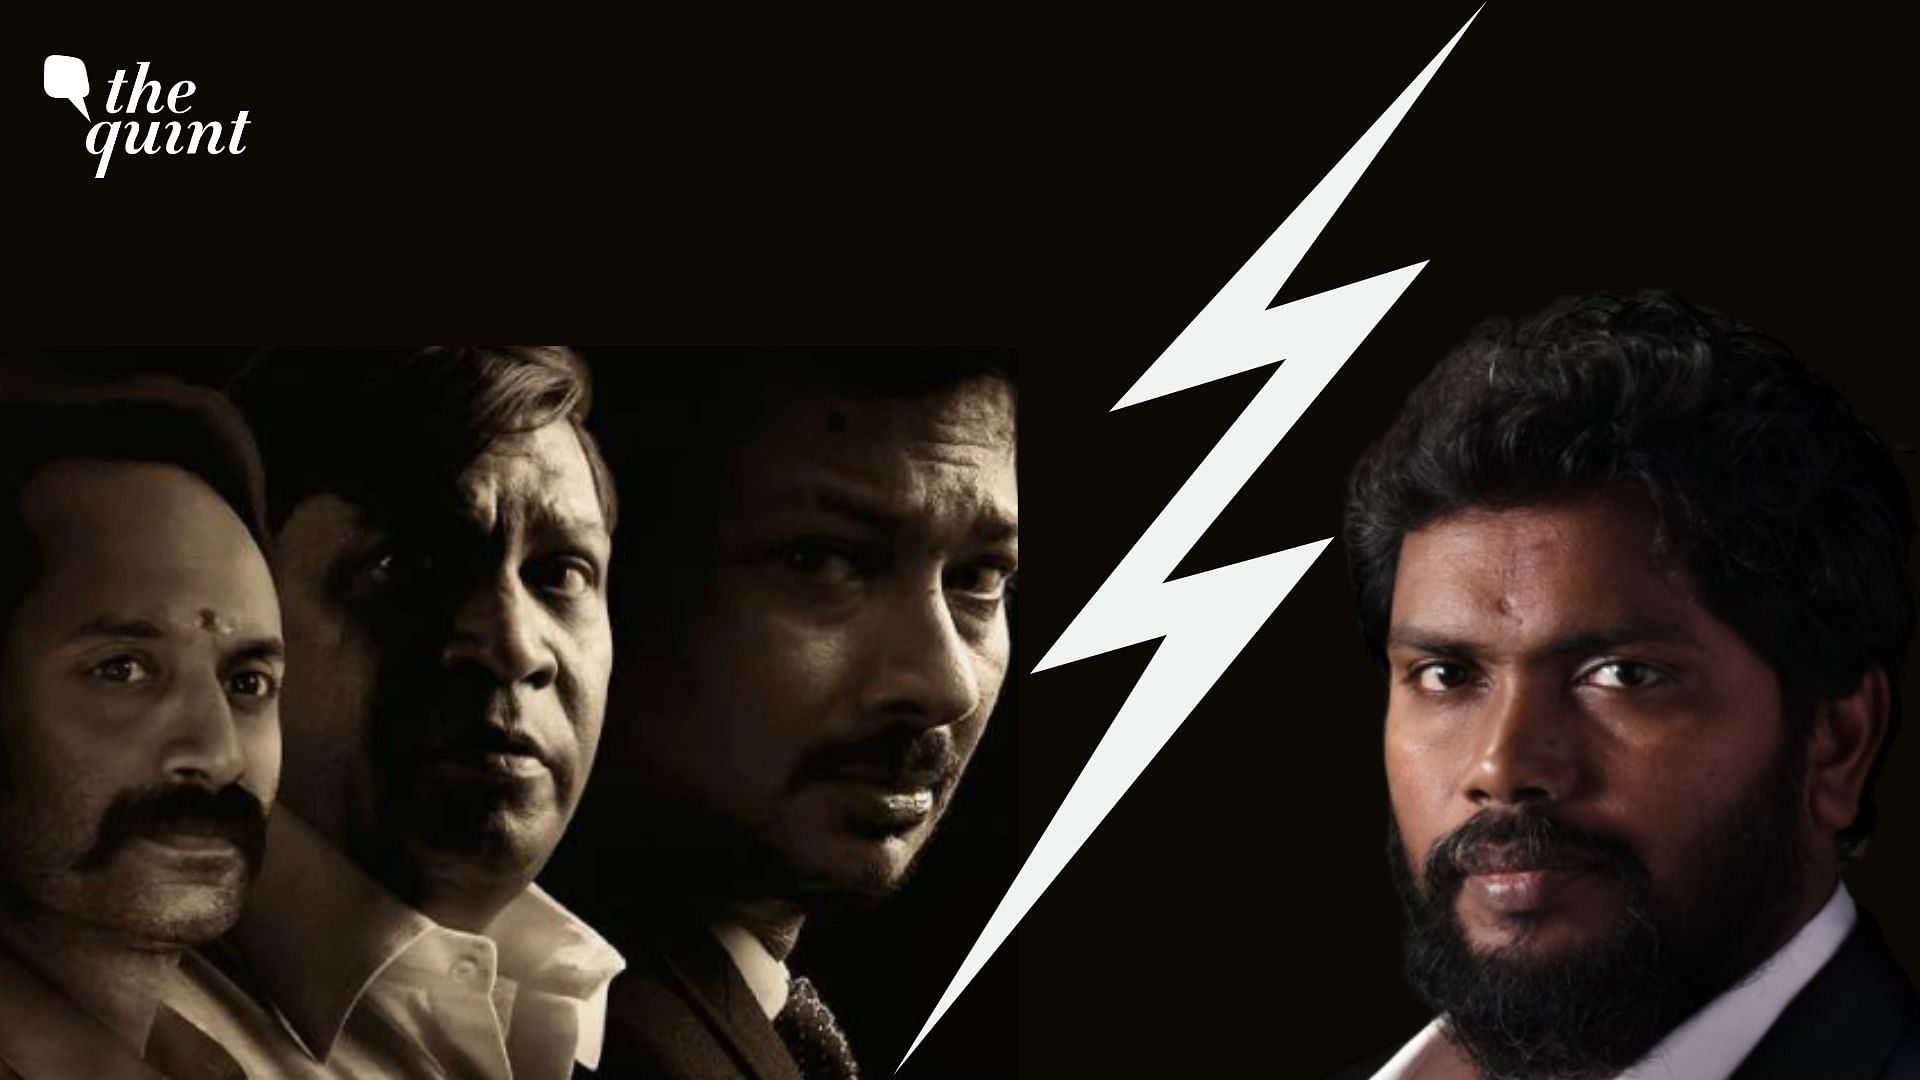 <div class="paragraphs"><p>The latest Tamil flick, <em>Maamannan, </em>starring Vadivelu, <a href="https://www.youtube.com/watch?v=giQn-6LrKm4">Fahadh Faasil</a>, and <a href="https://www.thequint.com/entertainment/movie-reviews/saani-kaayidham-movie-review-keerthy-suresh-and-selvaraghavan-terrific-performance-arun-matheeswaran">Keerthy Suresh</a> (and music composed by <a href="https://www.thequint.com/entertainment/movie-reviews/iravin-nizhal-movie-review-parthiban-ar-rahman-world-first-single-shot-non-linear-film-wild-experiment">AR Rahman</a>) is directed by Mari Selvaraj of <em>Pariyerum Perumal</em> and <em>Karnan </em>fame.</p></div>